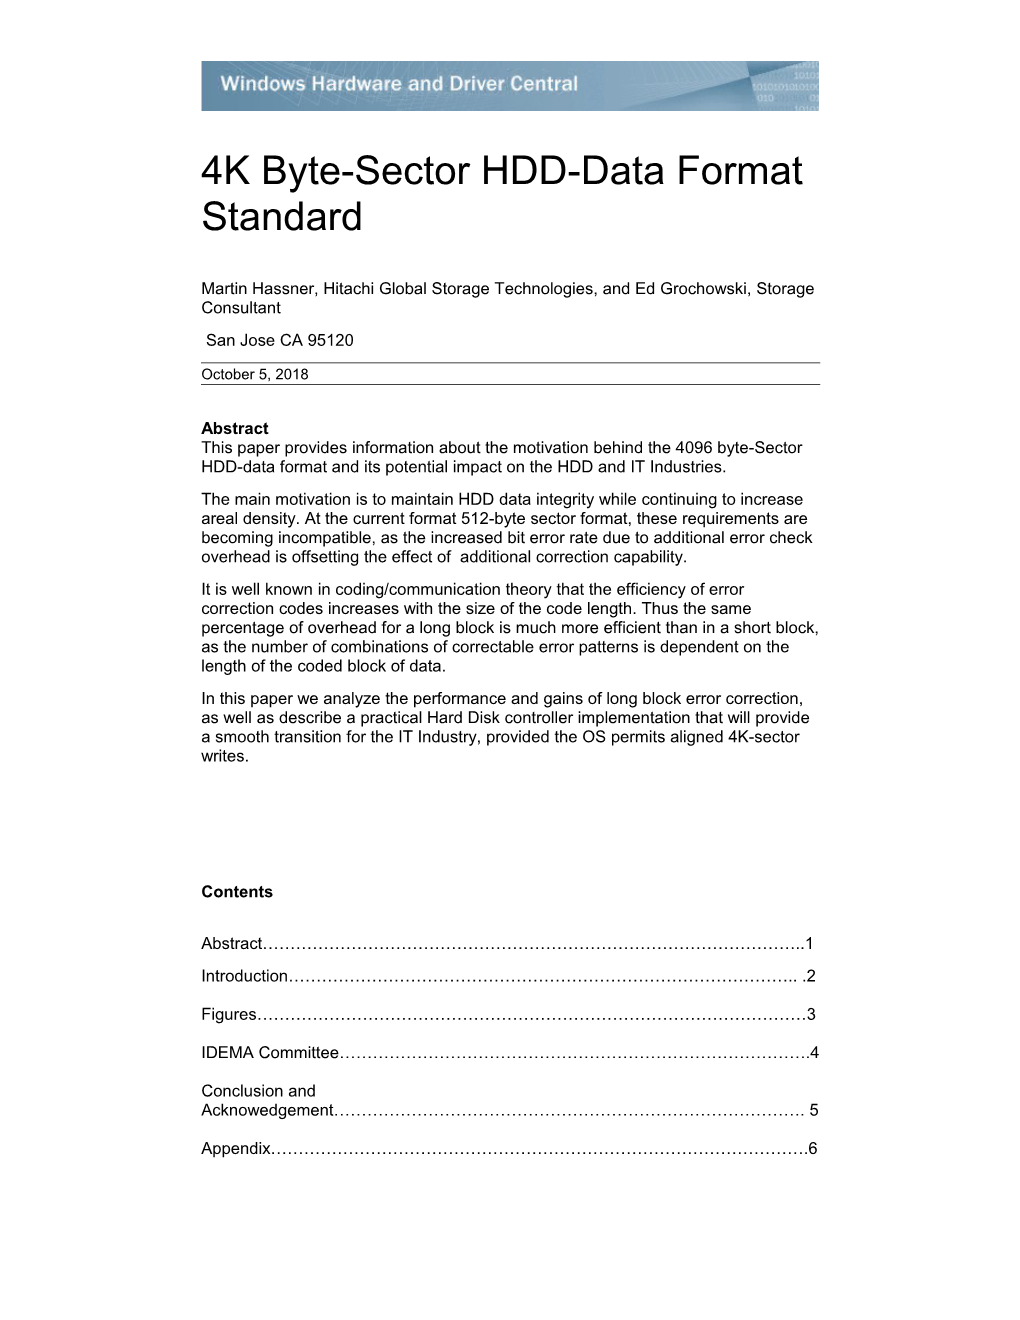 4K Byte-Sector HDD-Data Format Standard